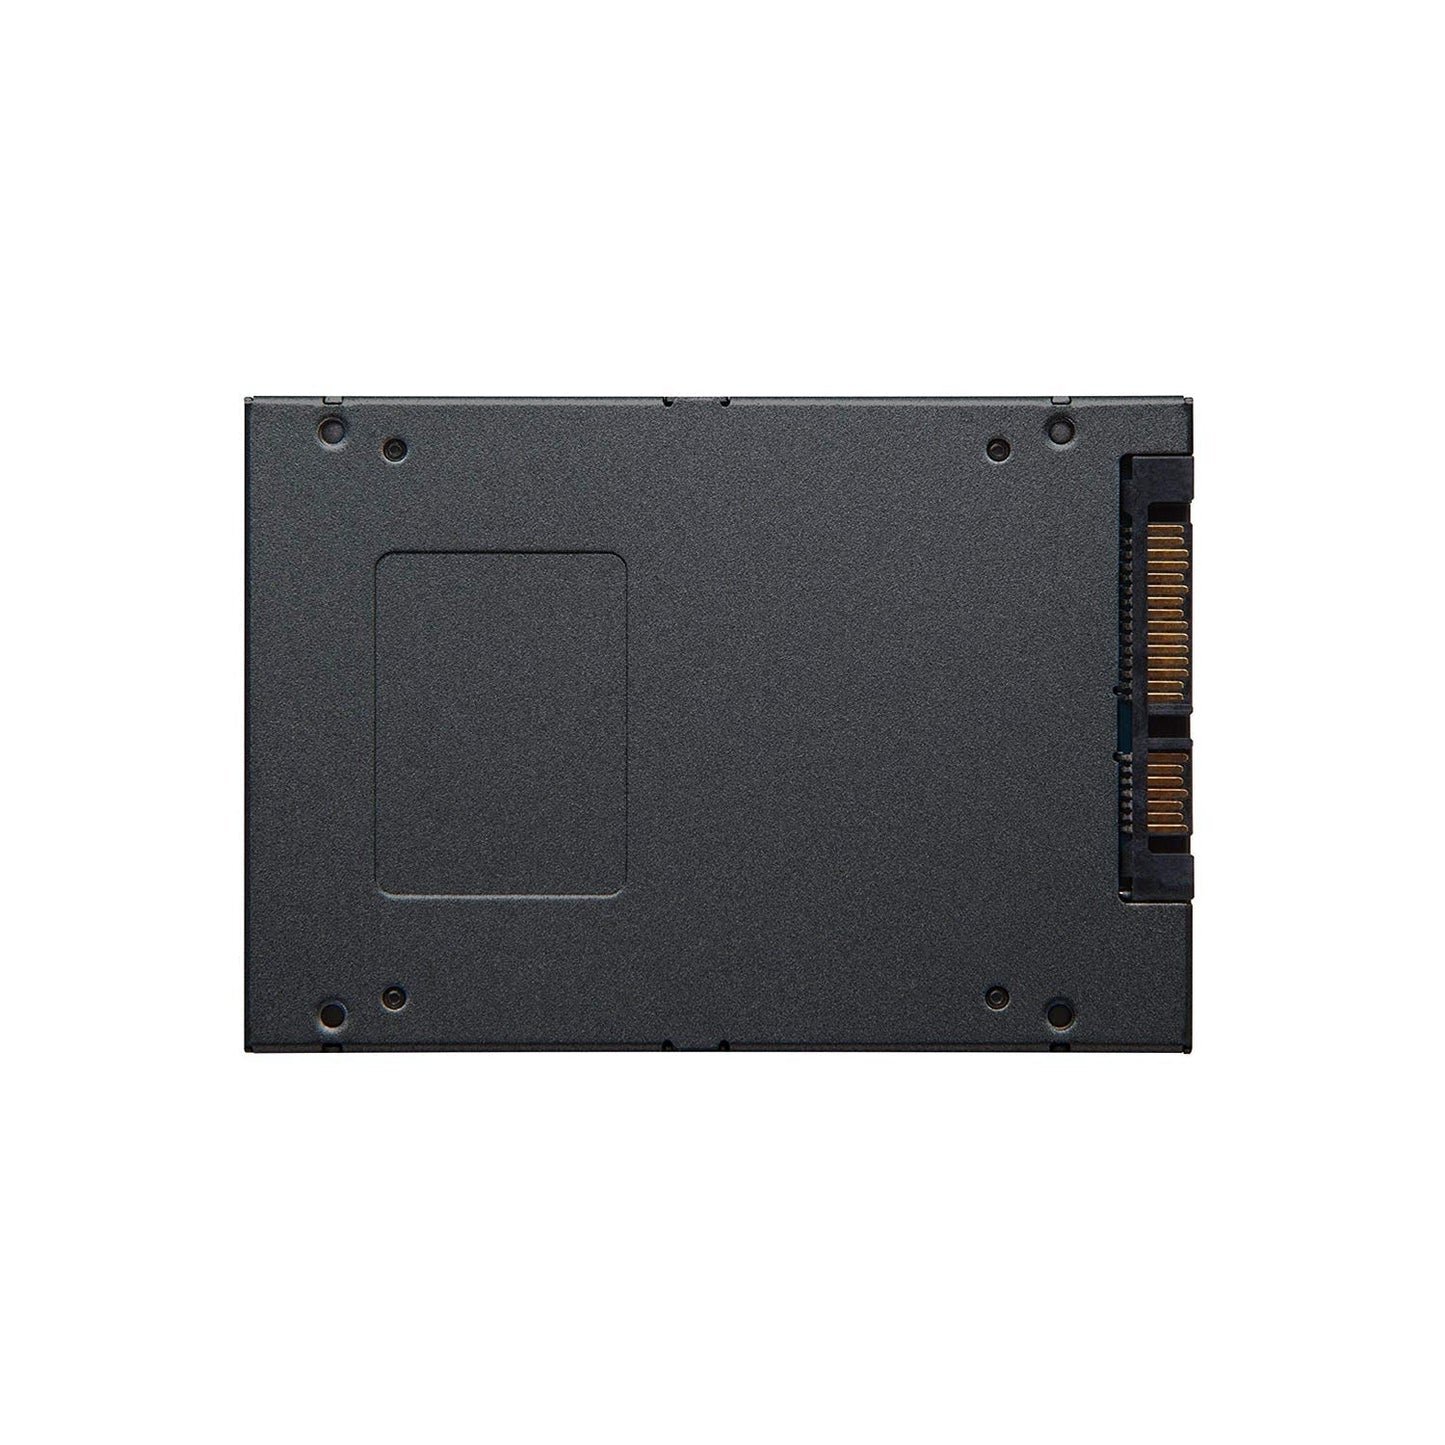 Kingston A400 240GB 2.5-inch SATA Internal Solid State Drive